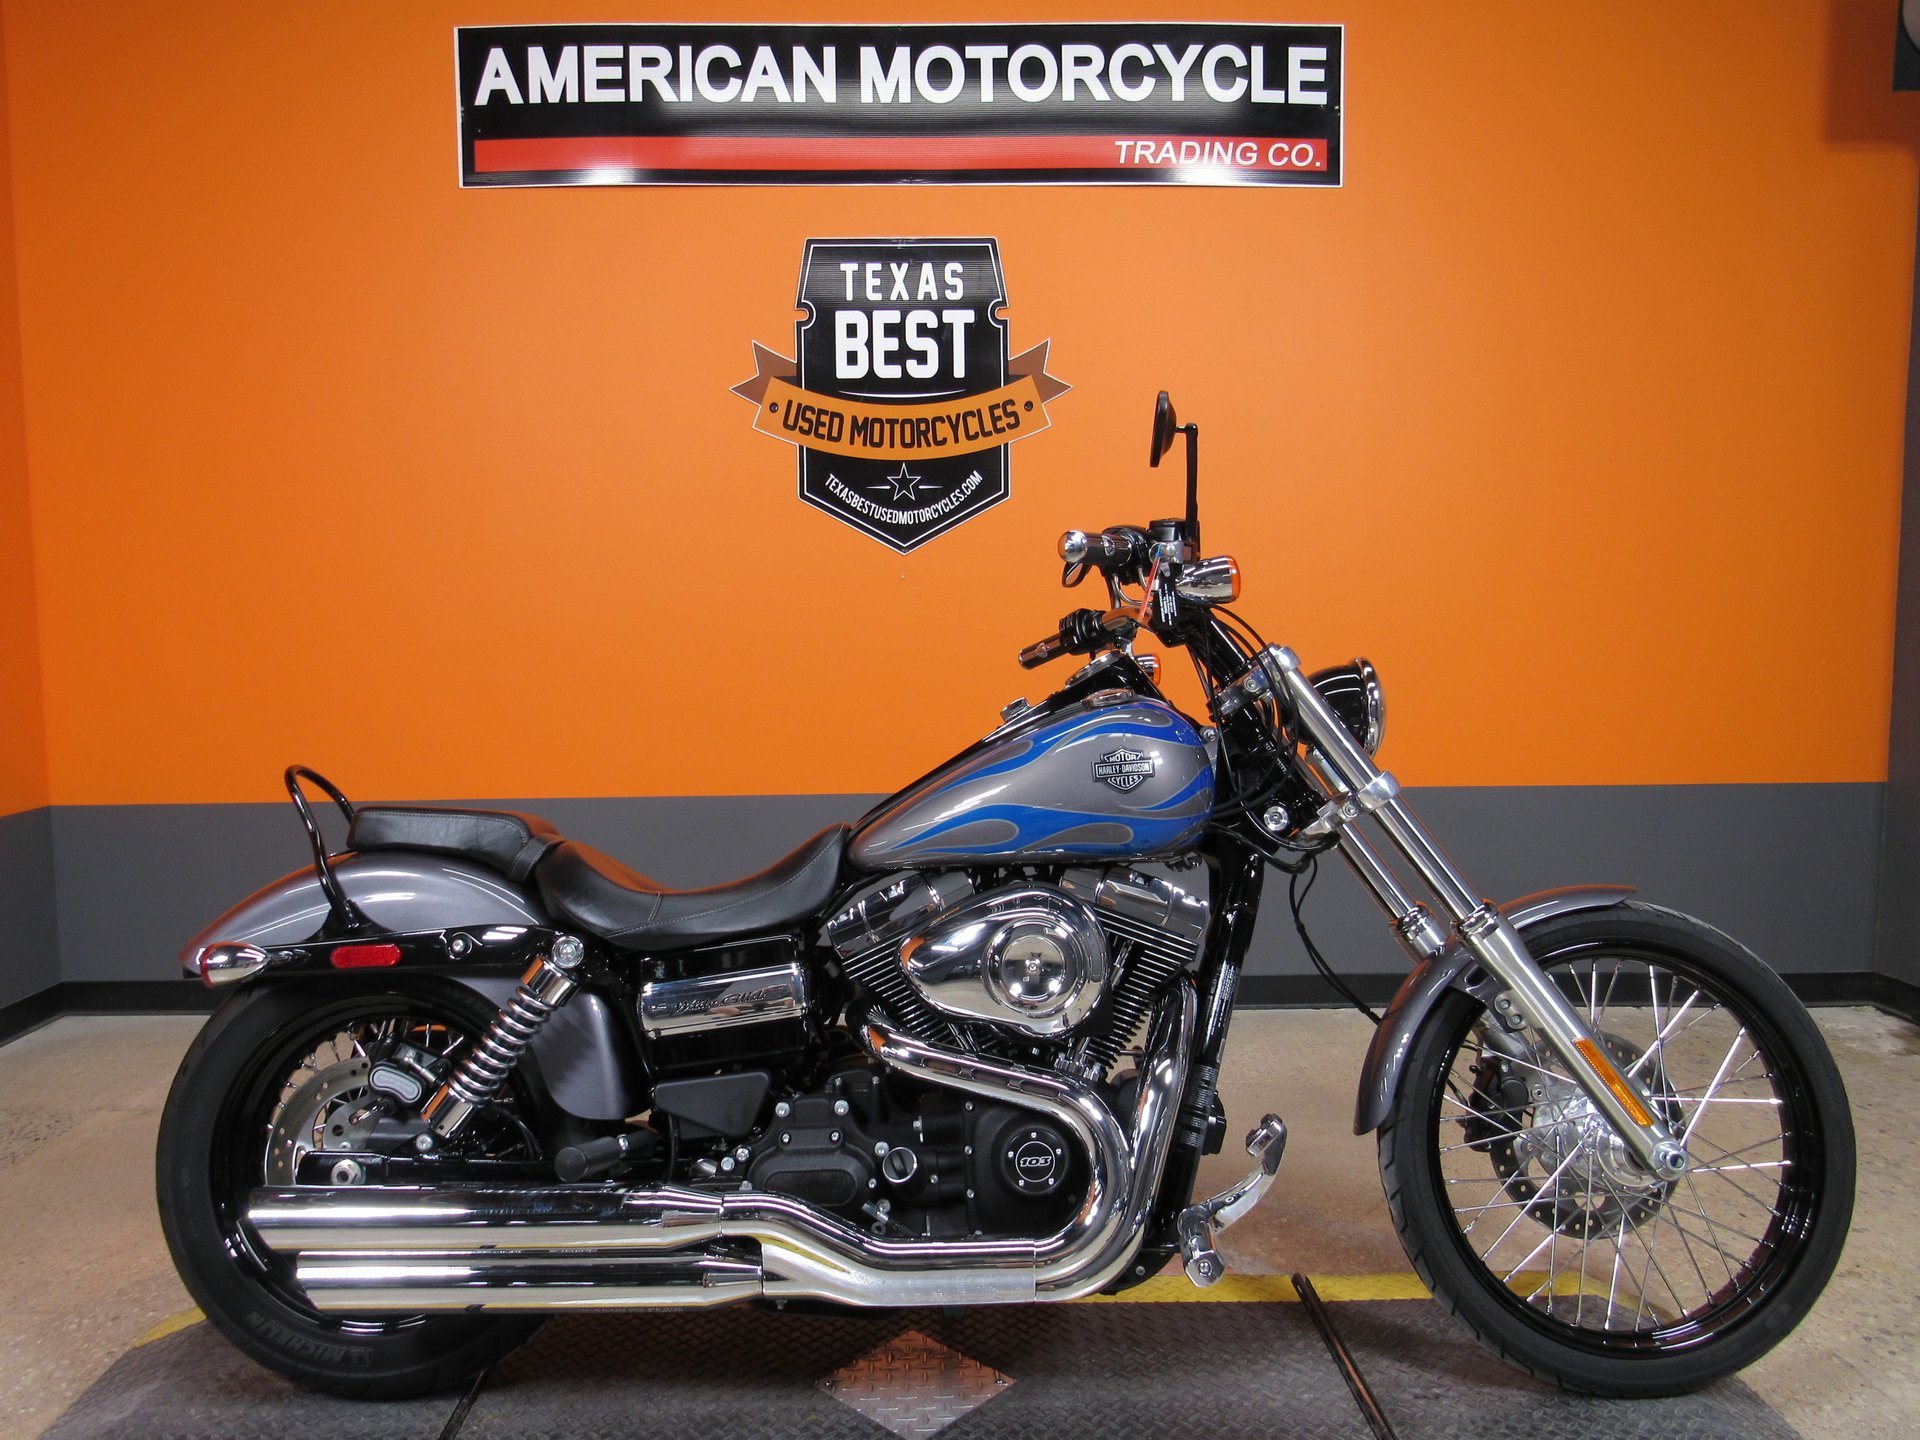 2014 Harley Davidson Dyna Wide Glide American Motorcycle Trading Company Used Harley Davidson Motorcycles